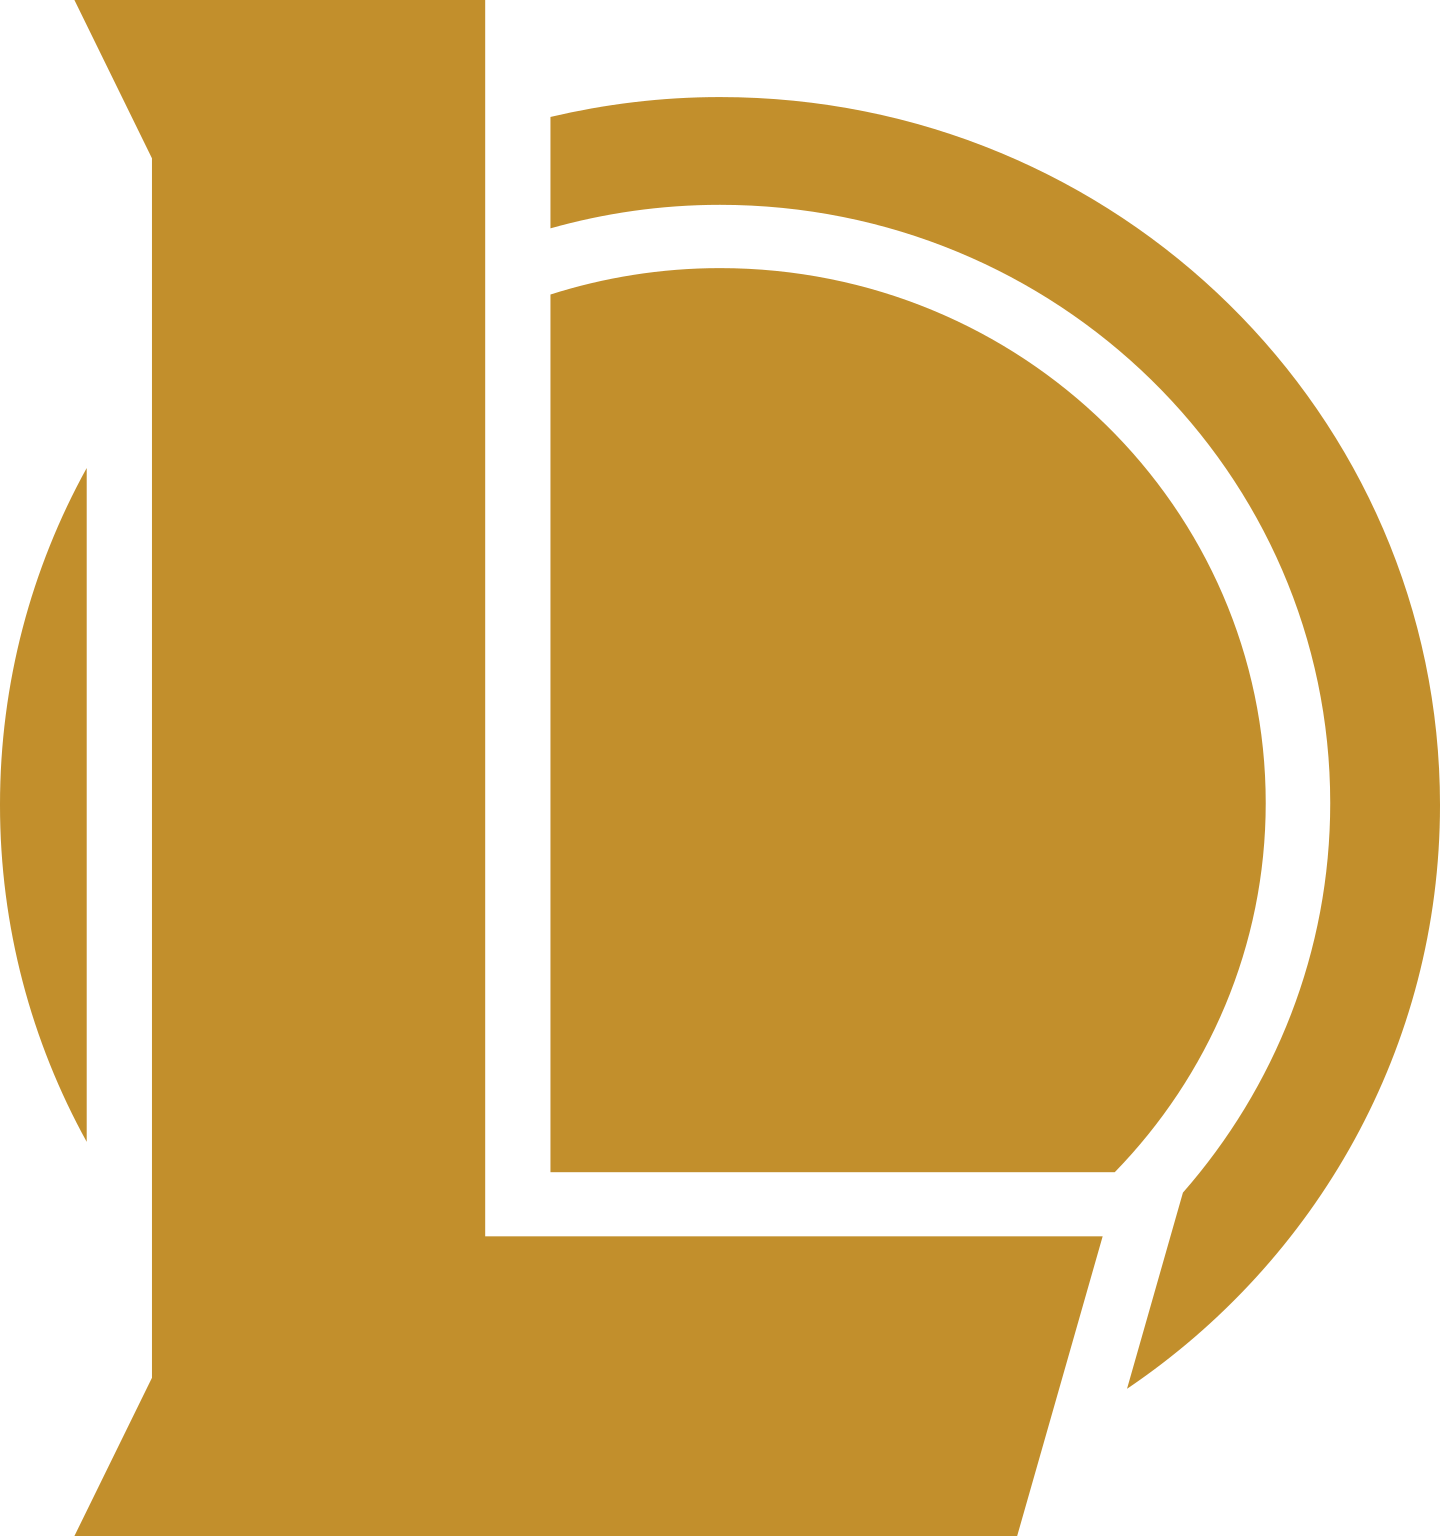 Lol Logo - League Of Legends Logo.